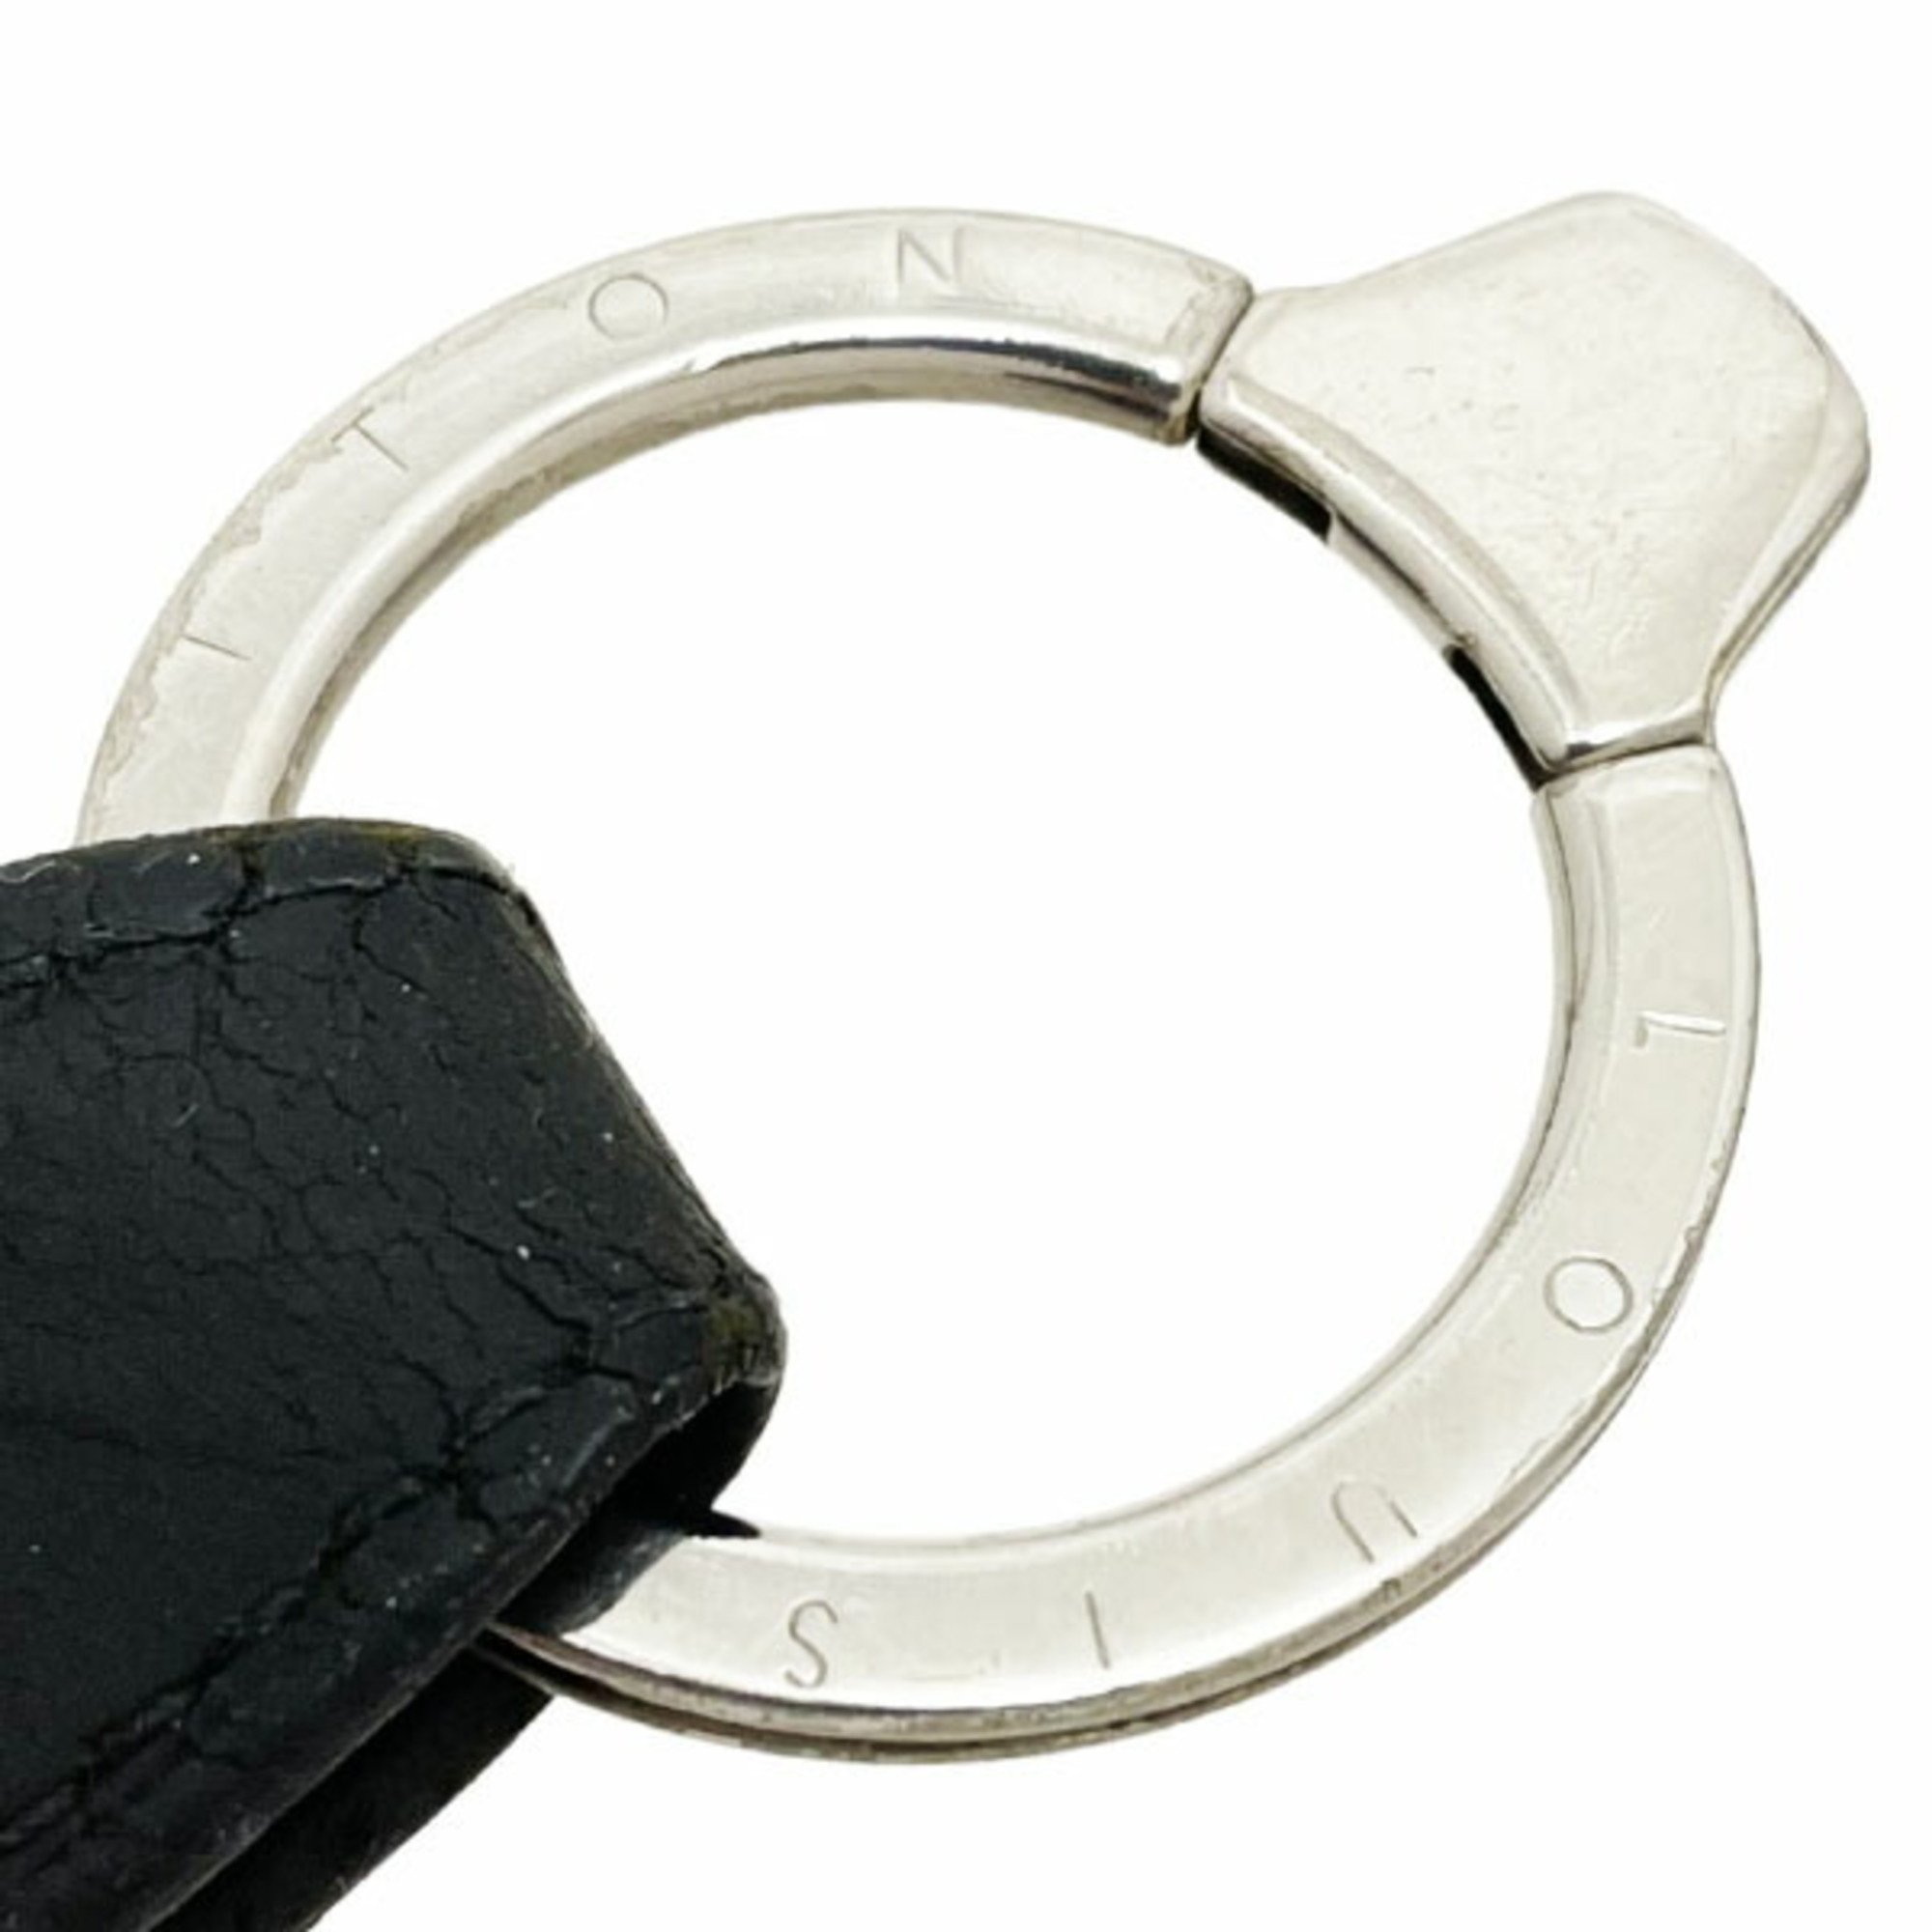 Louis Vuitton Keychain Nomad Porte Cle Vallee Leather Noir Black M85034 LOUIS VUITTON Key Ring Hook Charm Bag HSY-13157